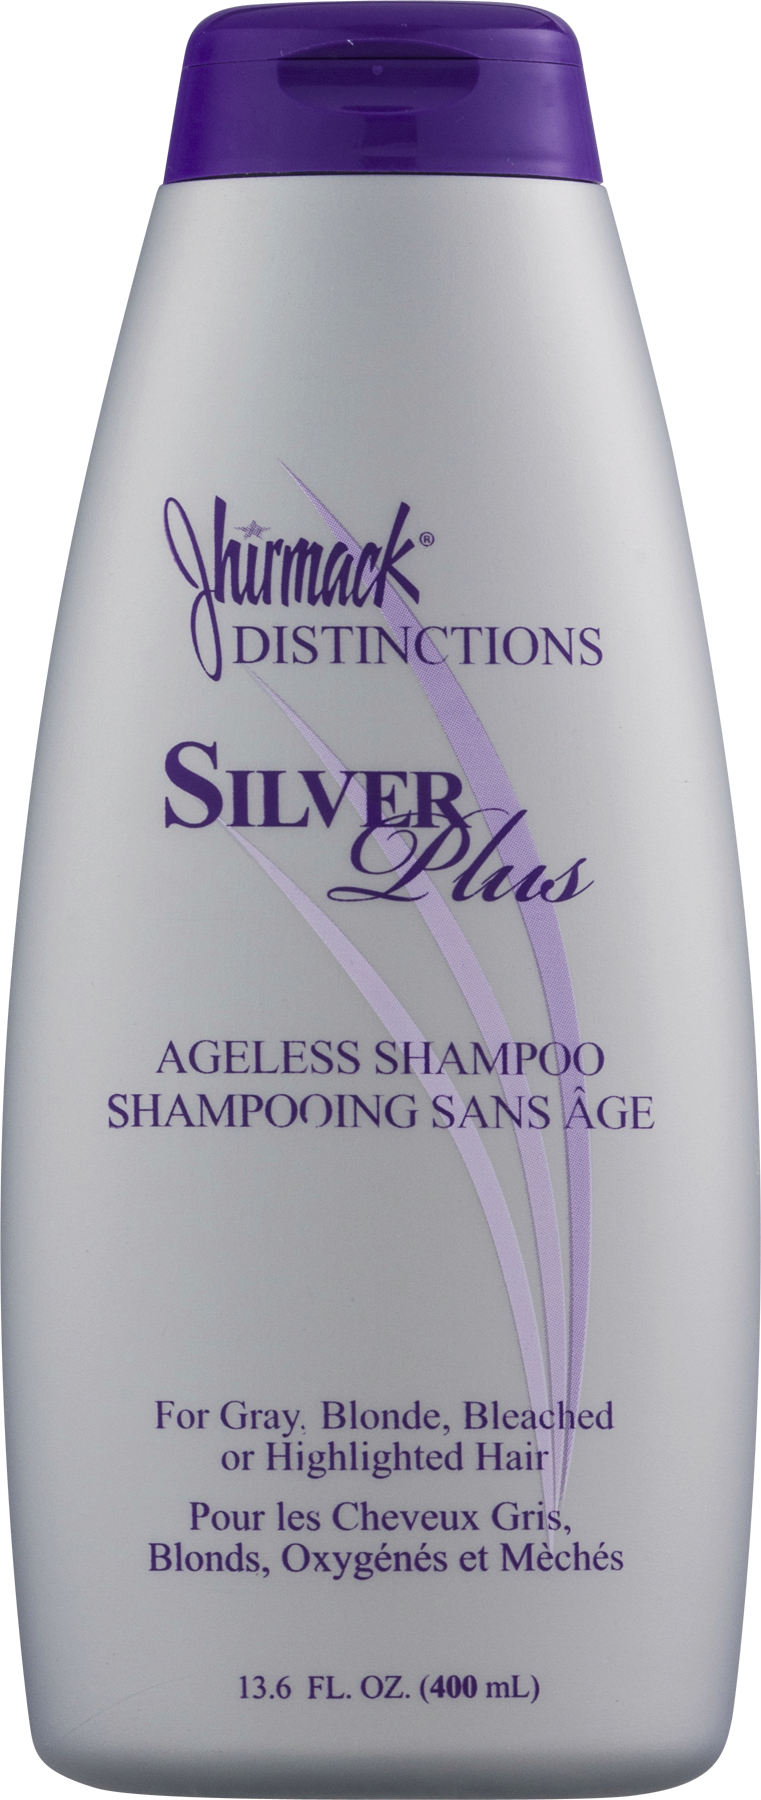 Jhirmack Distinctions Silver Plus Shampoo, 13.6 Oz - image 1 of 7